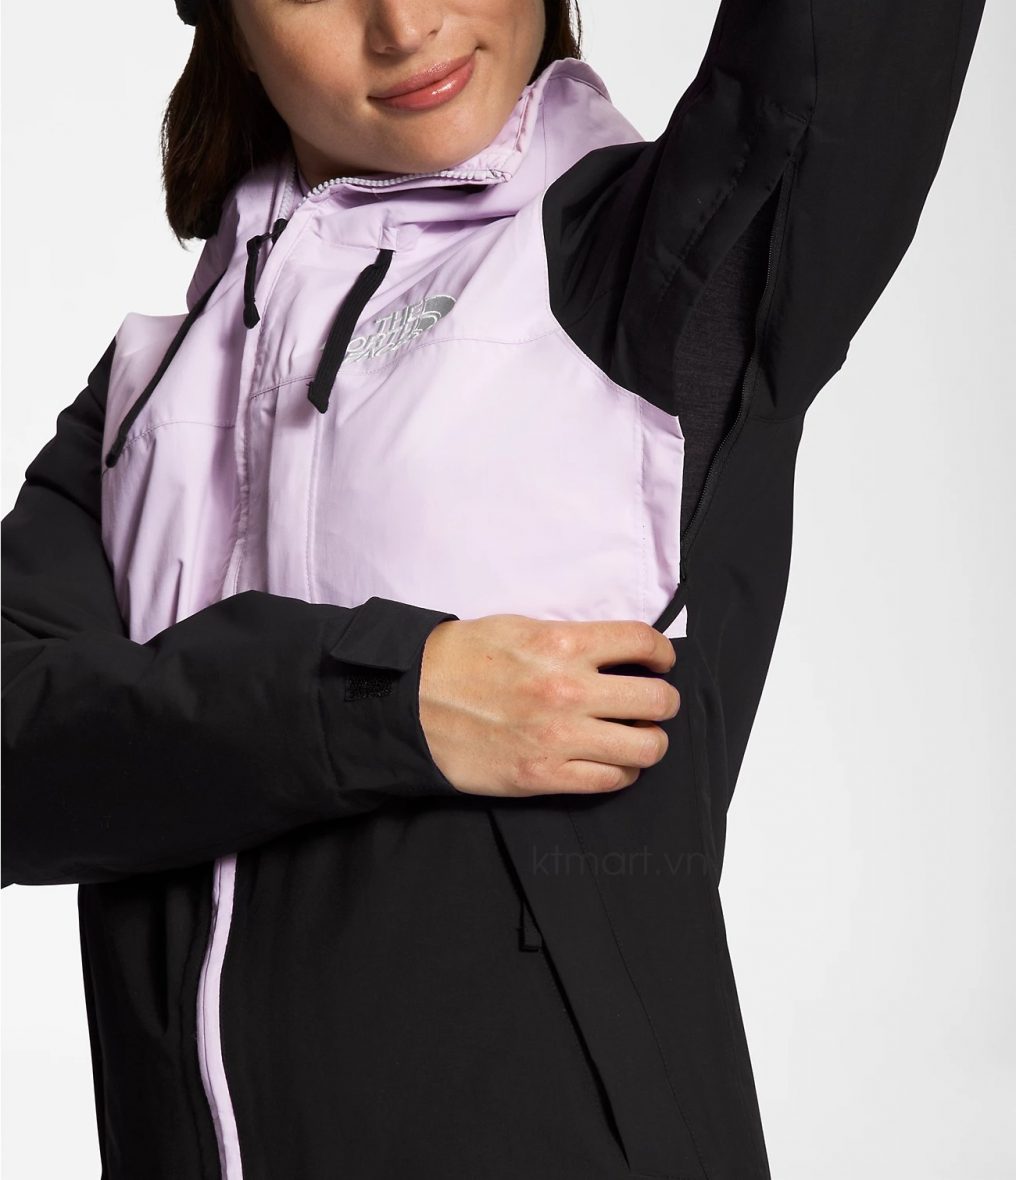 The North Face Women’s Superlu Ski Jacket NF0A4R1D ktmart 9